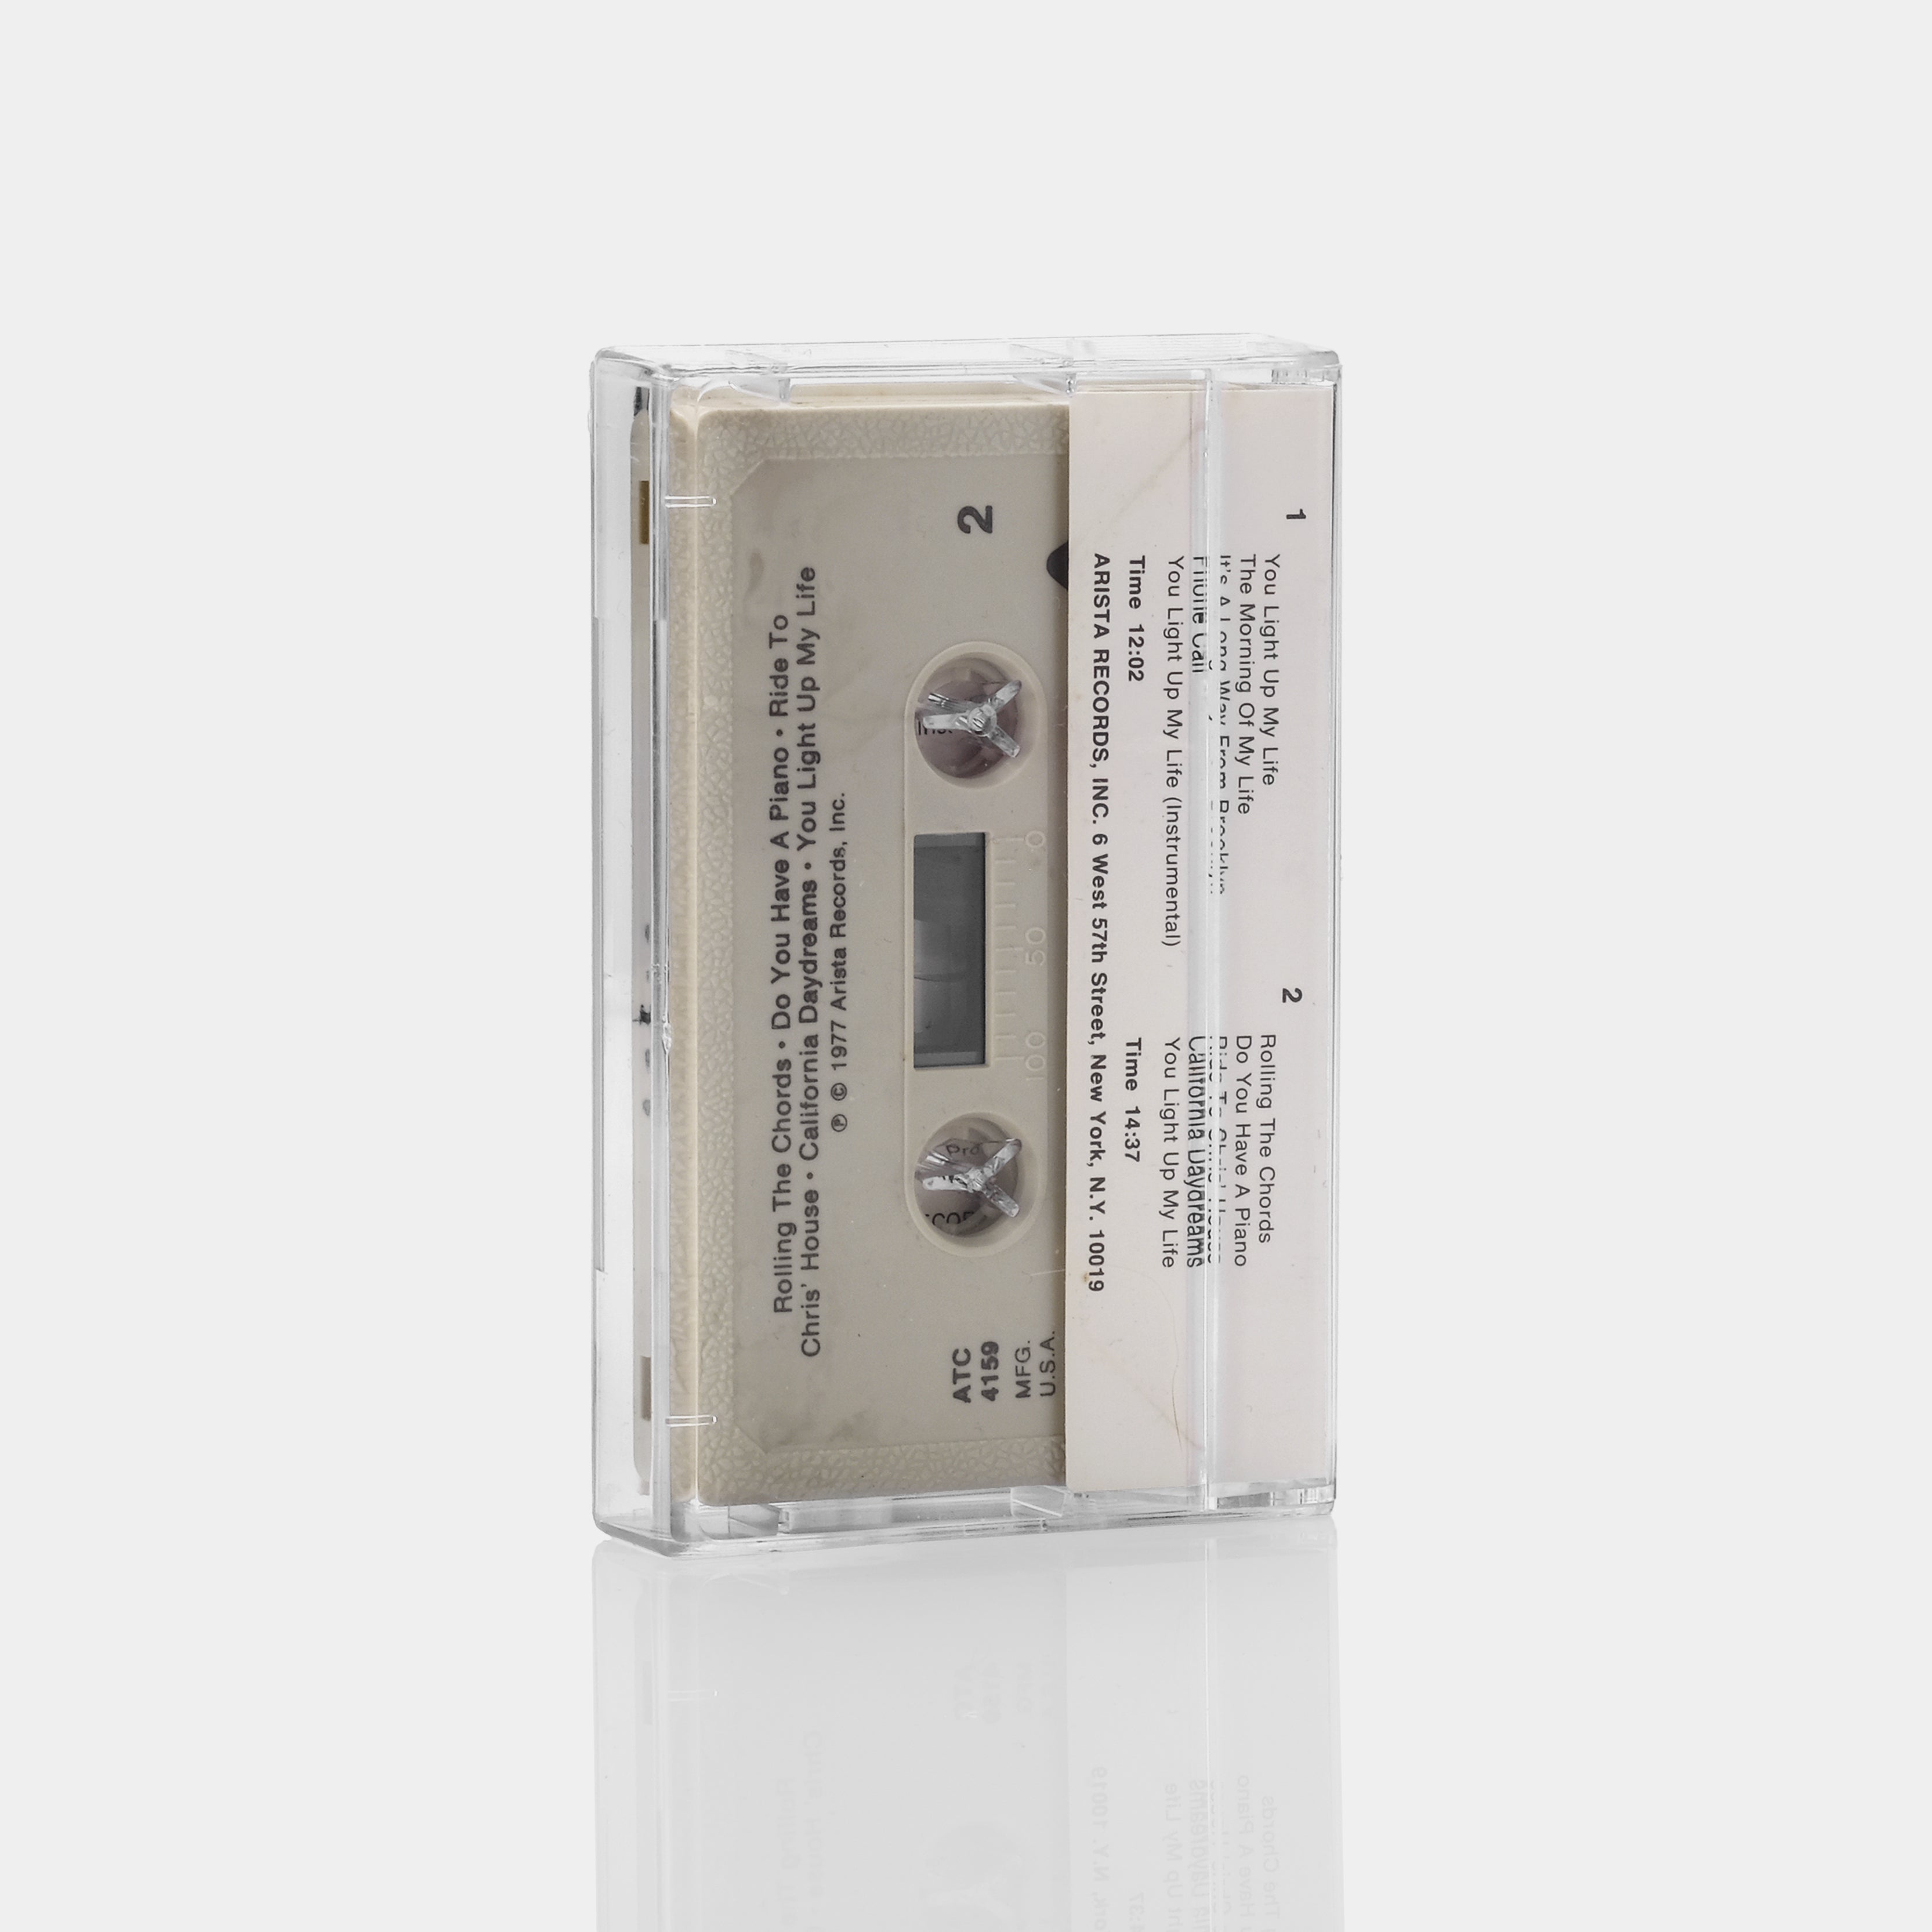 Joe Brooks - You Light Up My Life (Original Soundtrack Recording) Cassette Tape